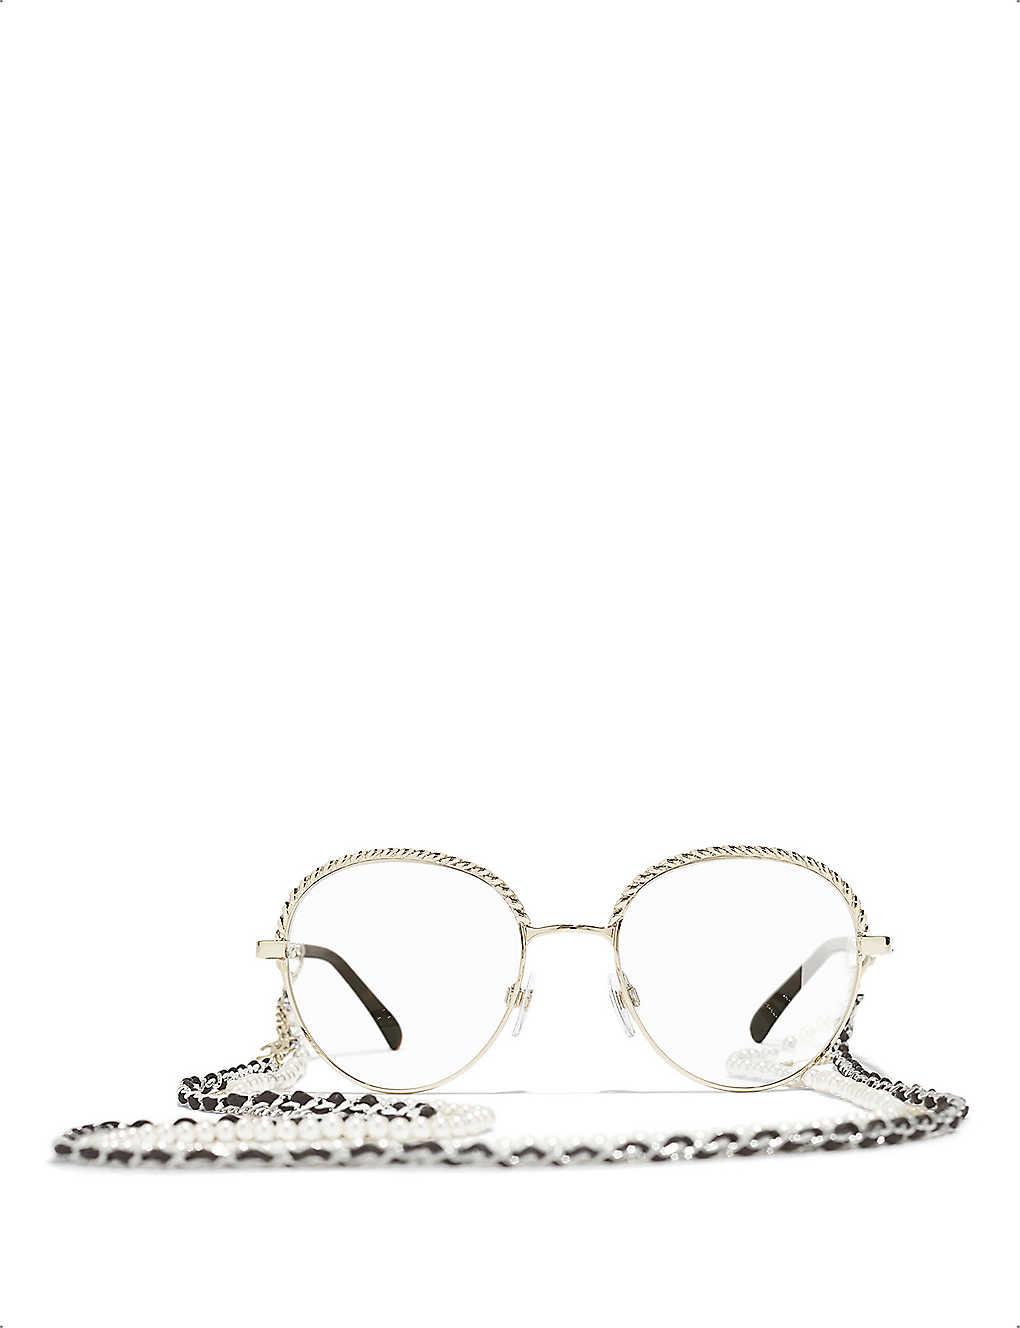 Chanel Pantos Eyeglasses in Natural